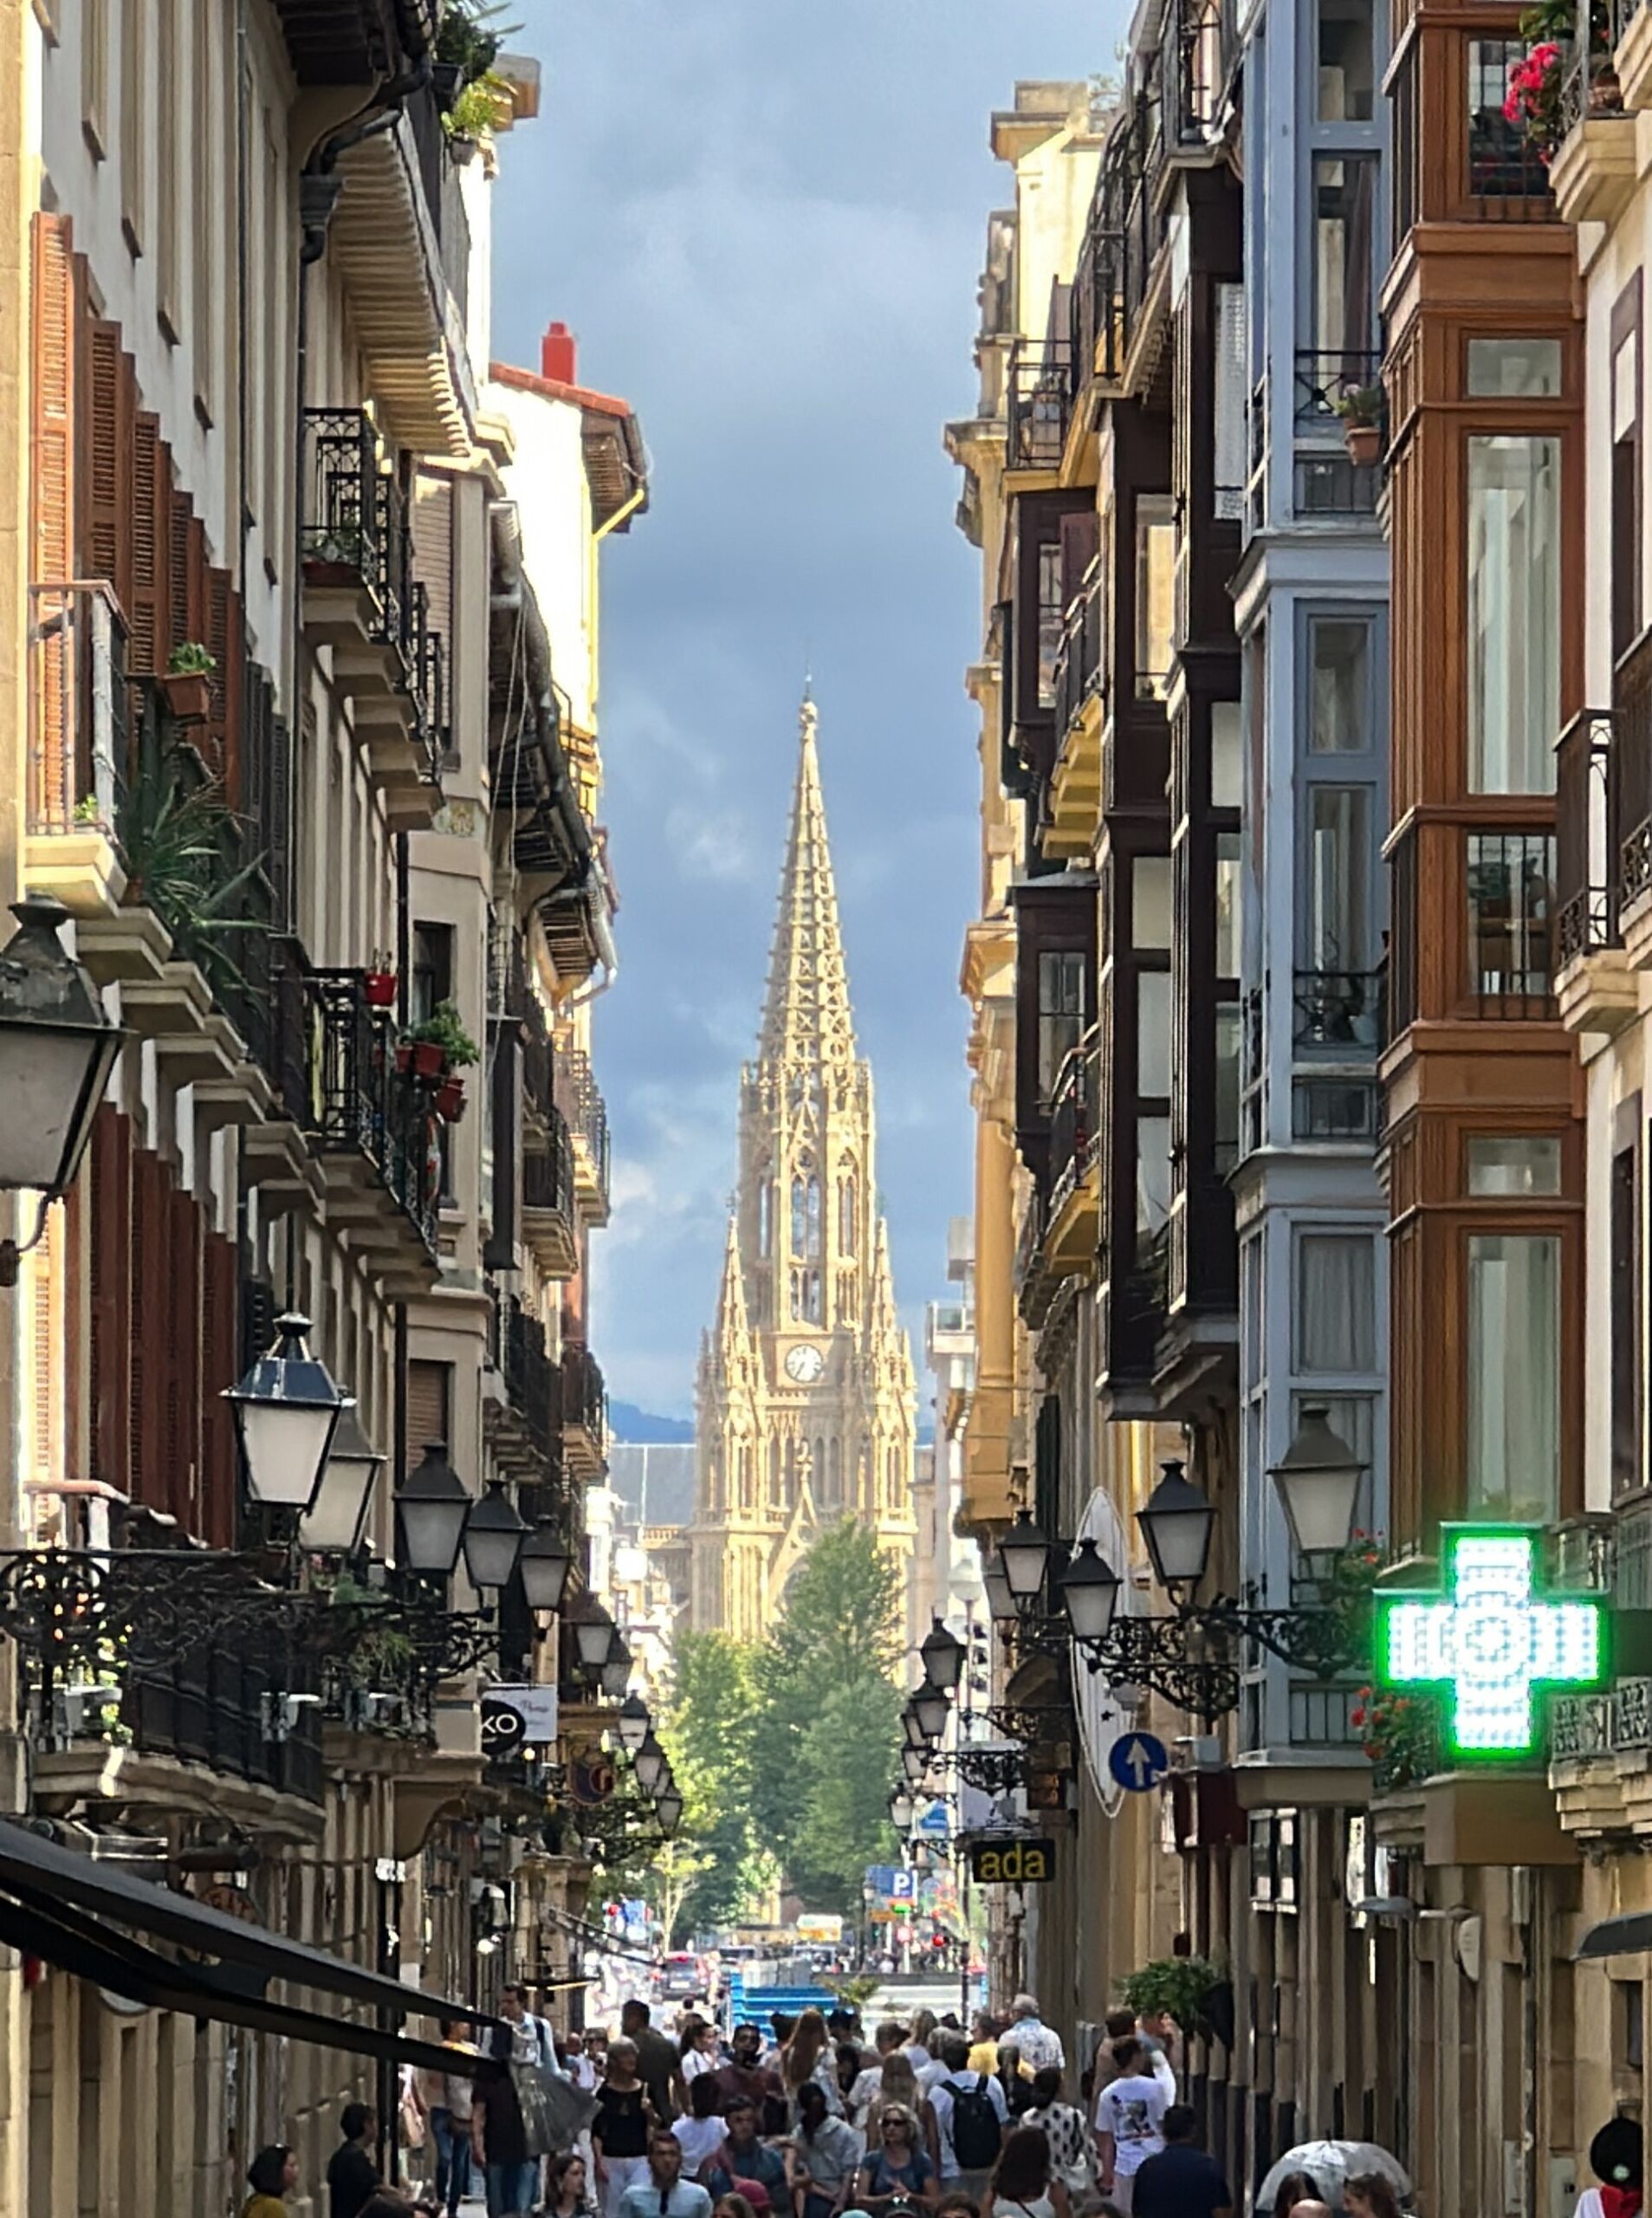 San Sebastian in Spain